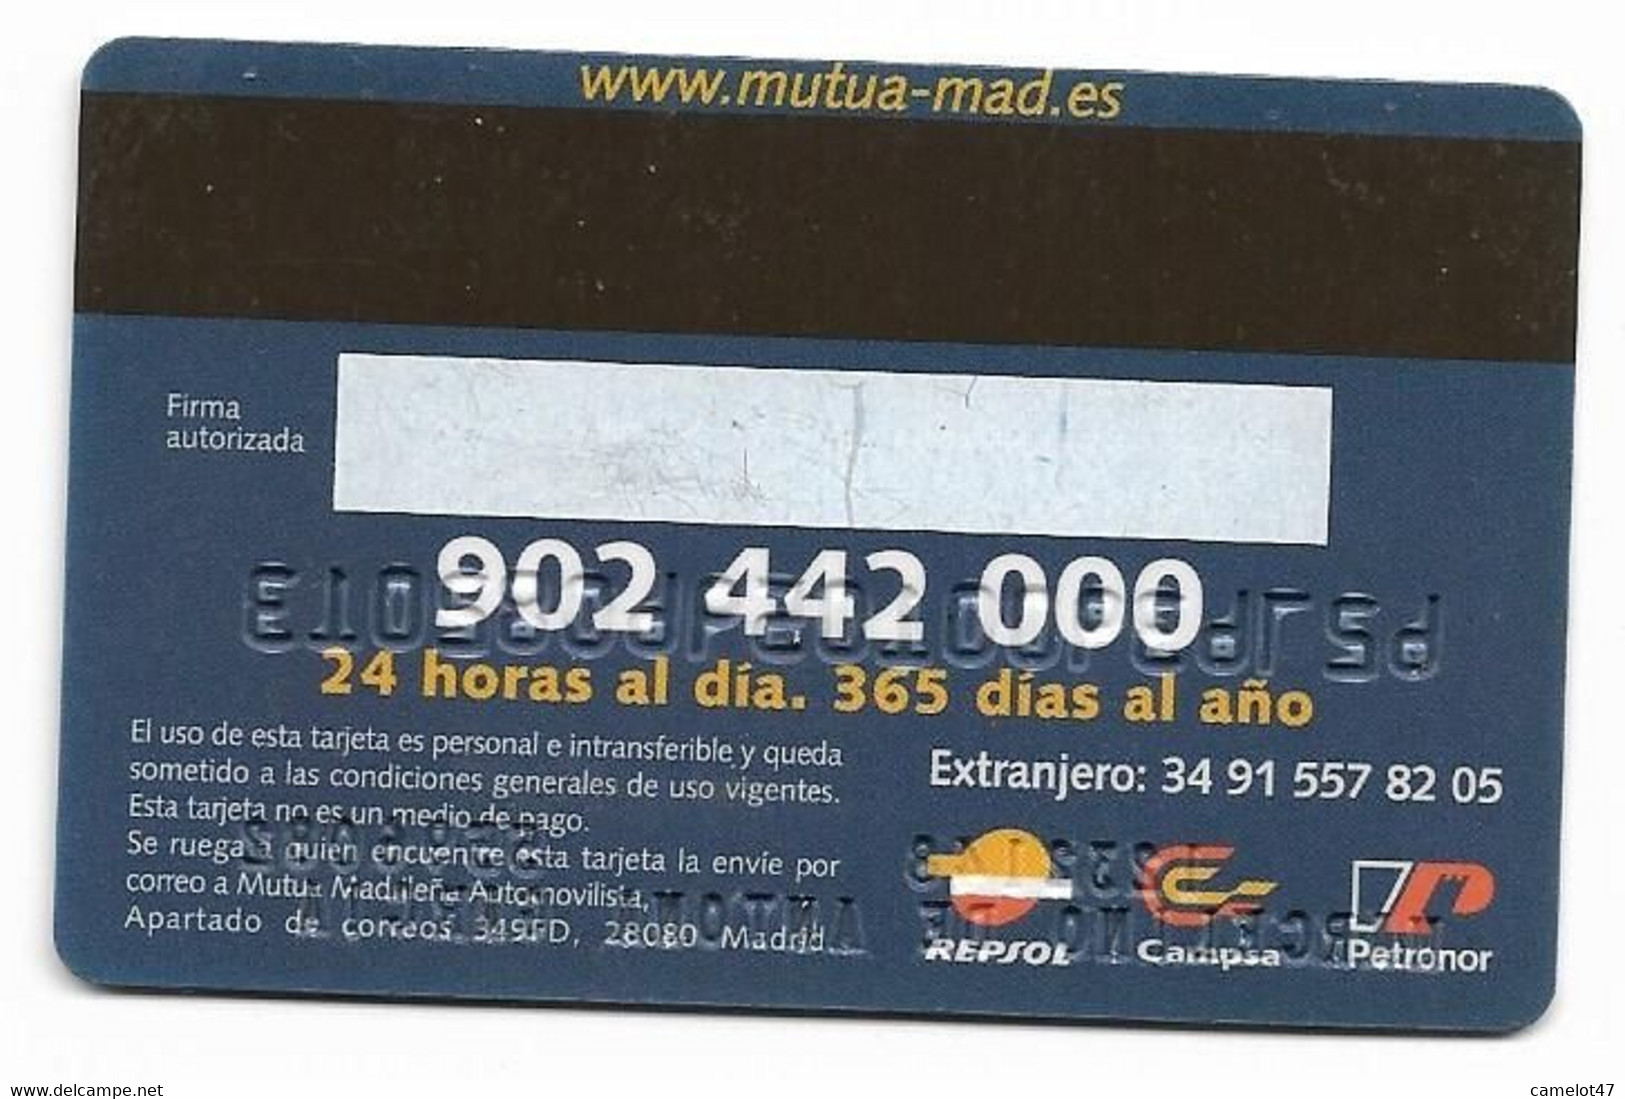 Repsol Spain, Gas Stations Rewards Magnetic Card, # Repsol-1  NOT A PHONE CARD - Erdöl